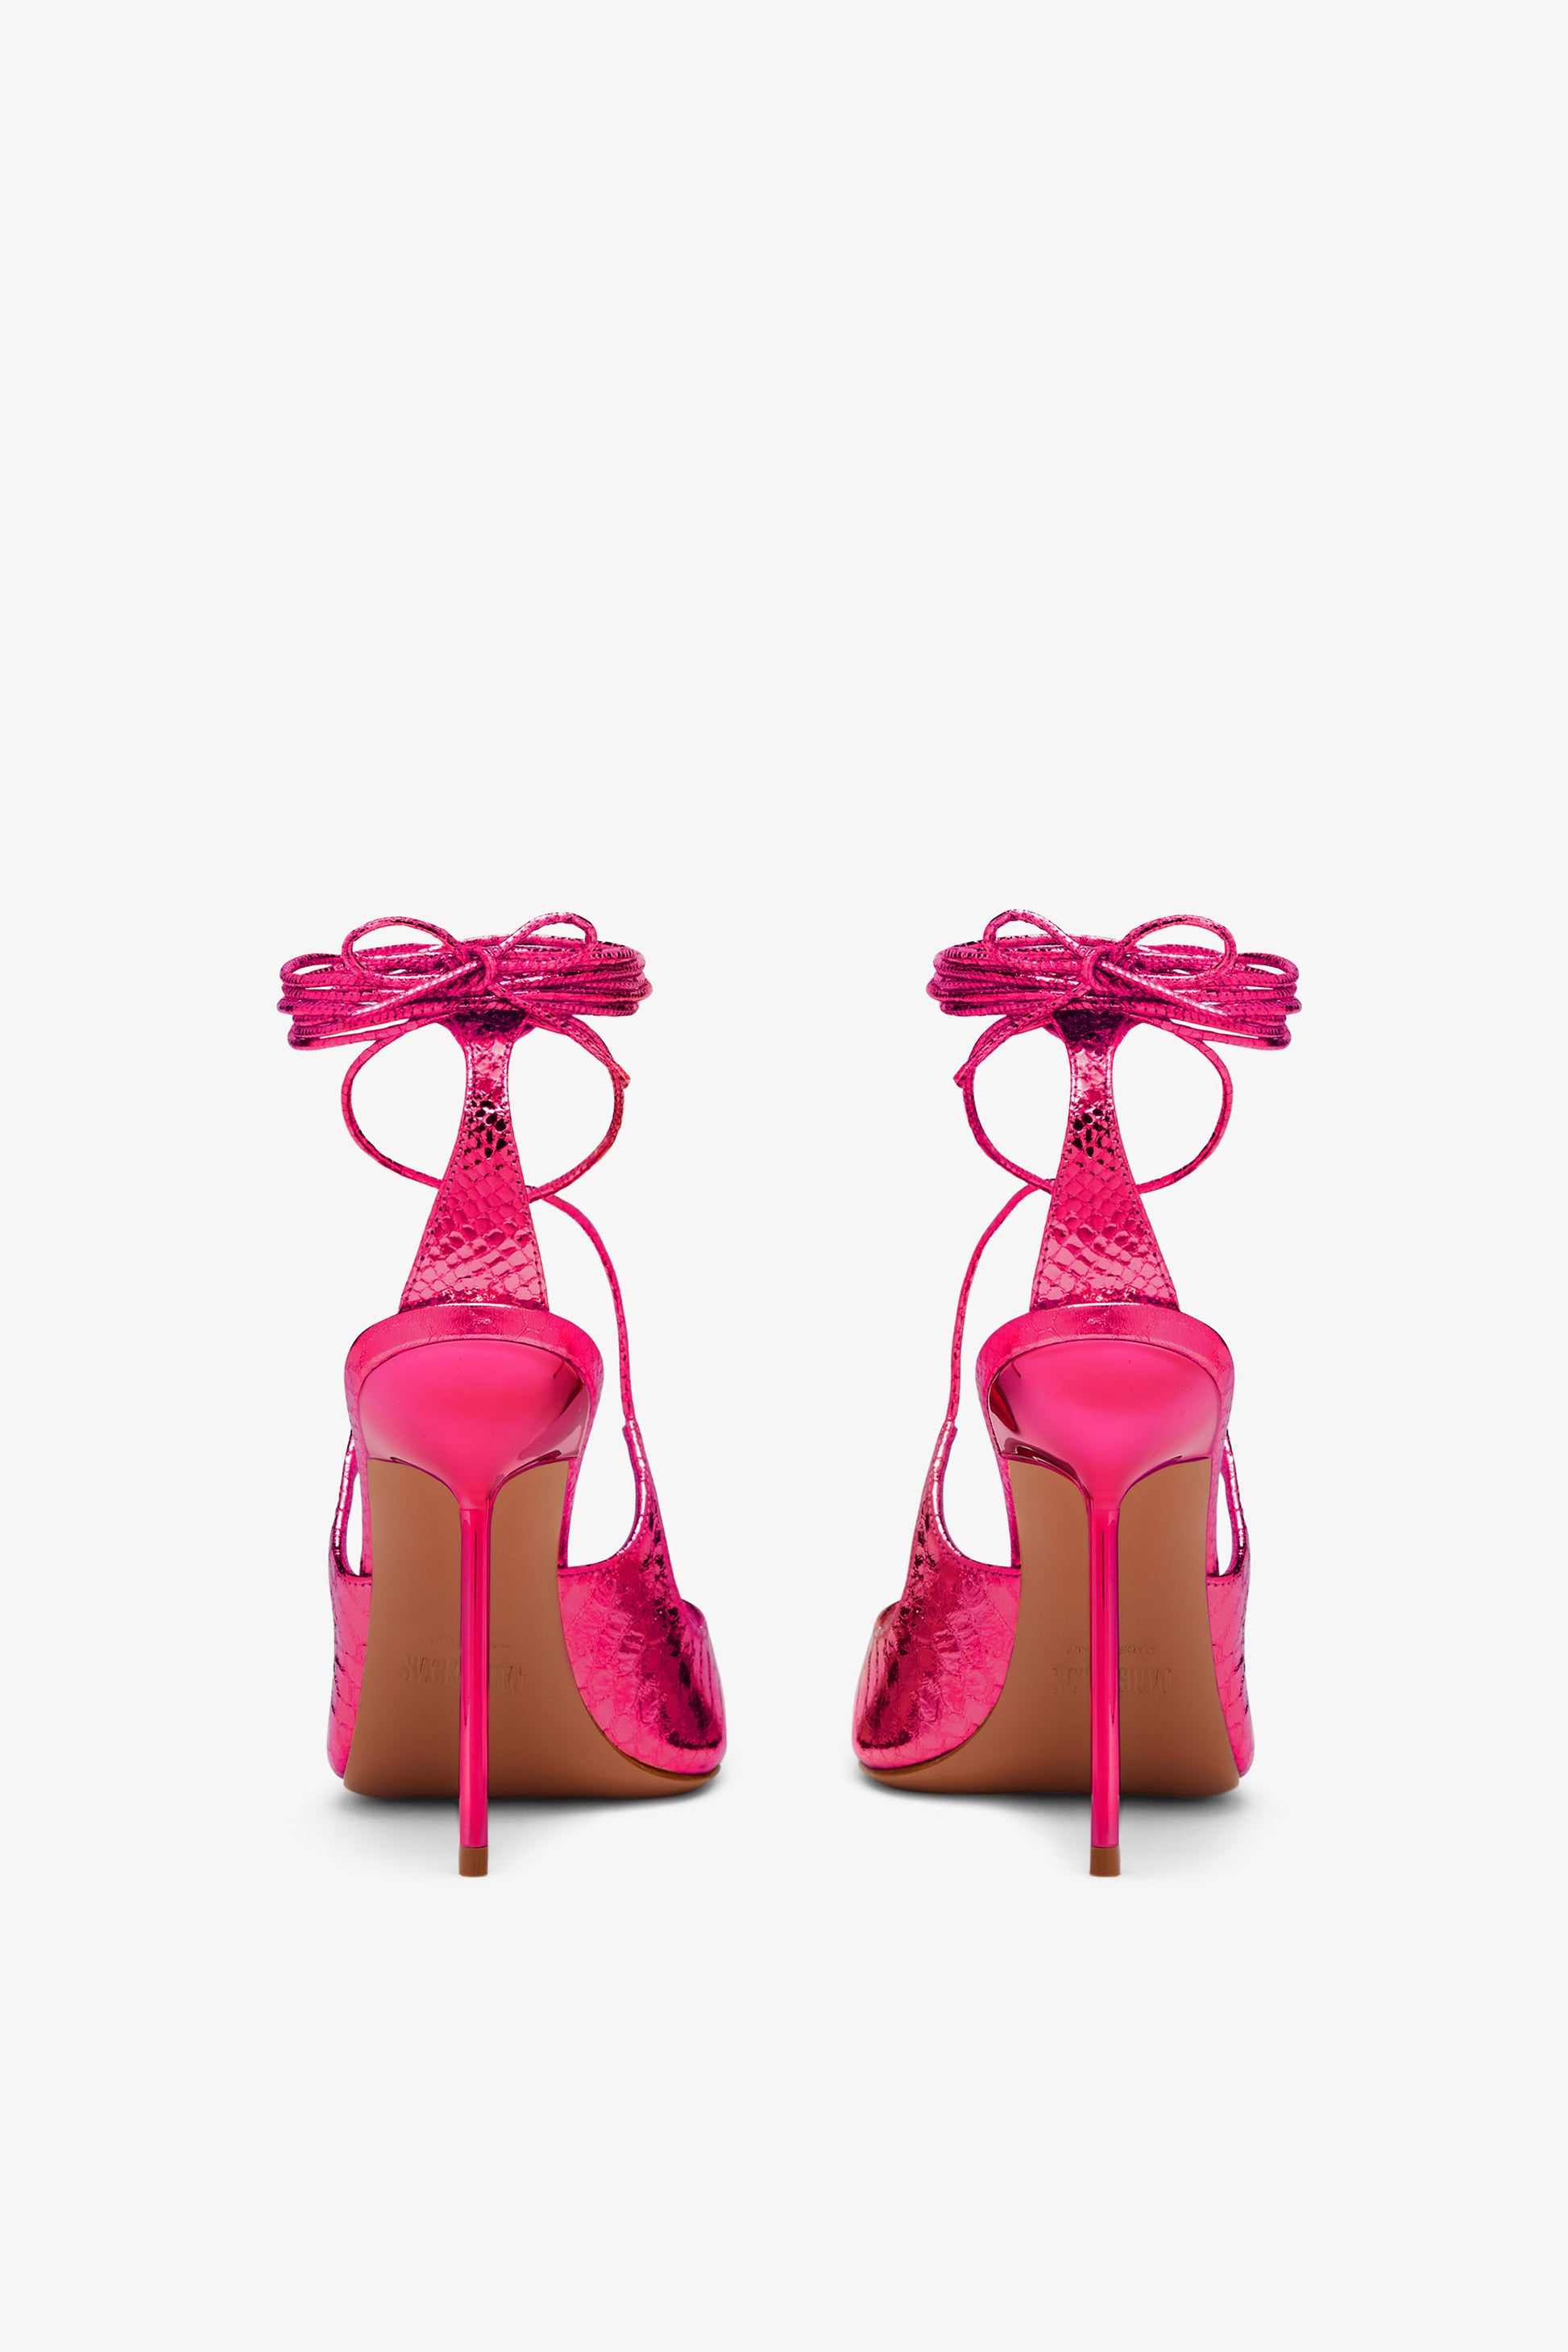 Pink embossed leather sandal